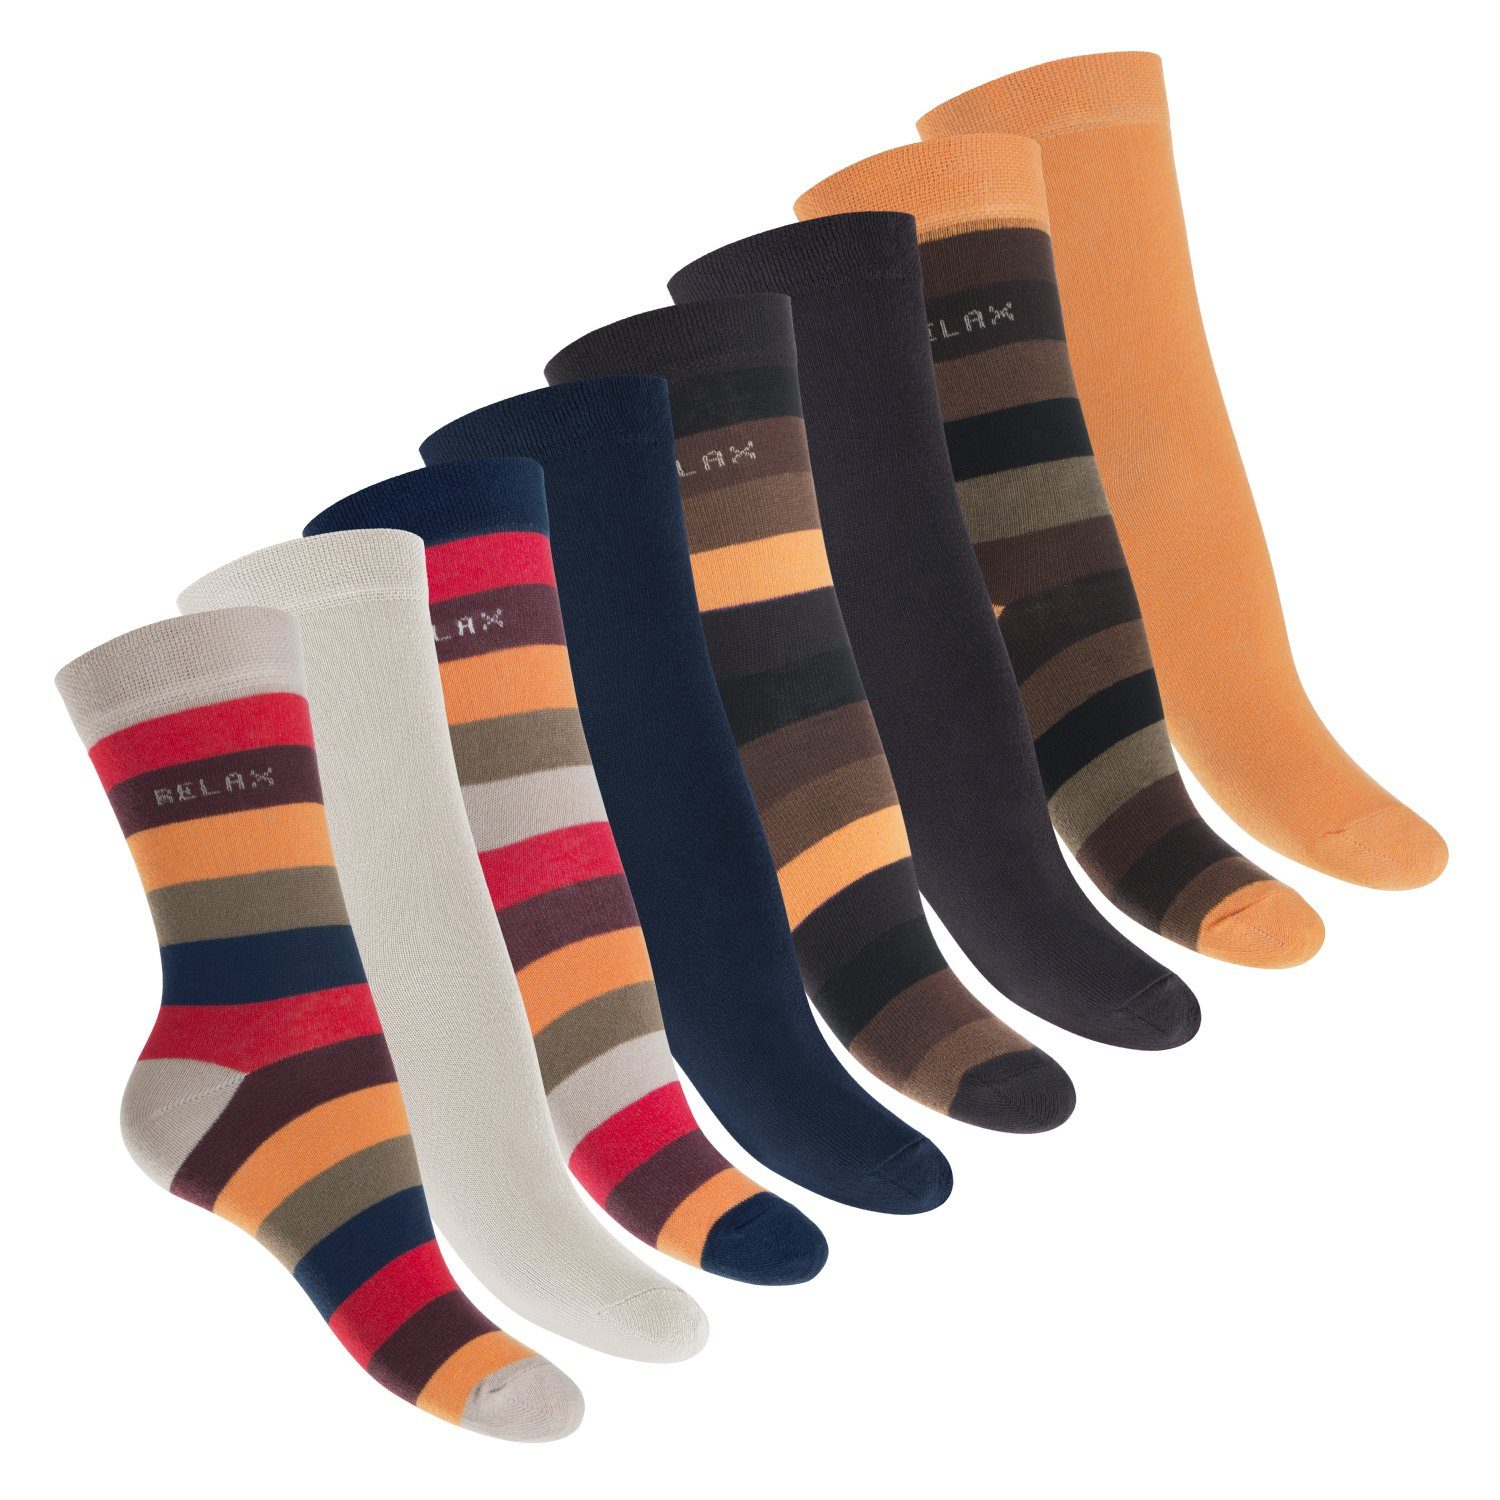 celodoro Basicsocken Damen Socken (8 Paar) mit Ringel-/Blockstreifen & Komfortbund Multicolor